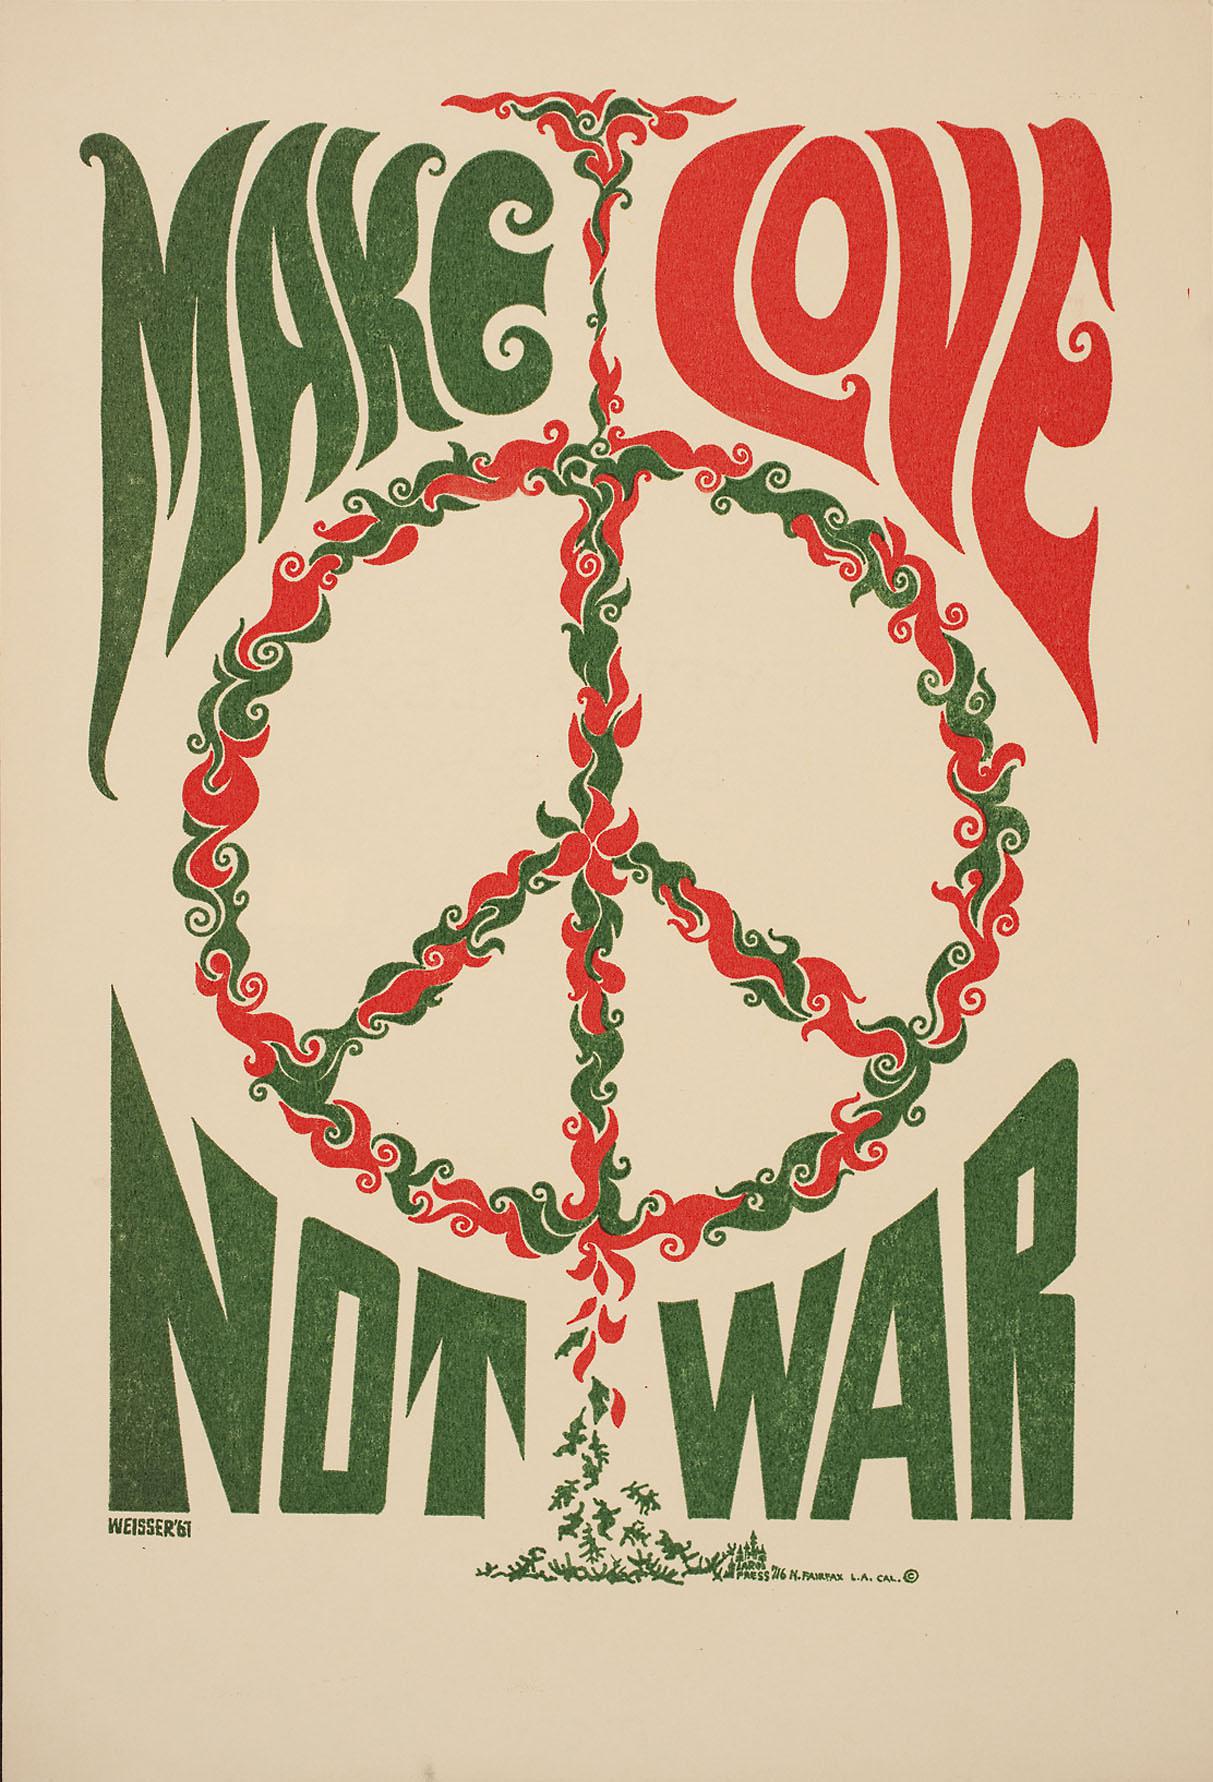 make Love not war!